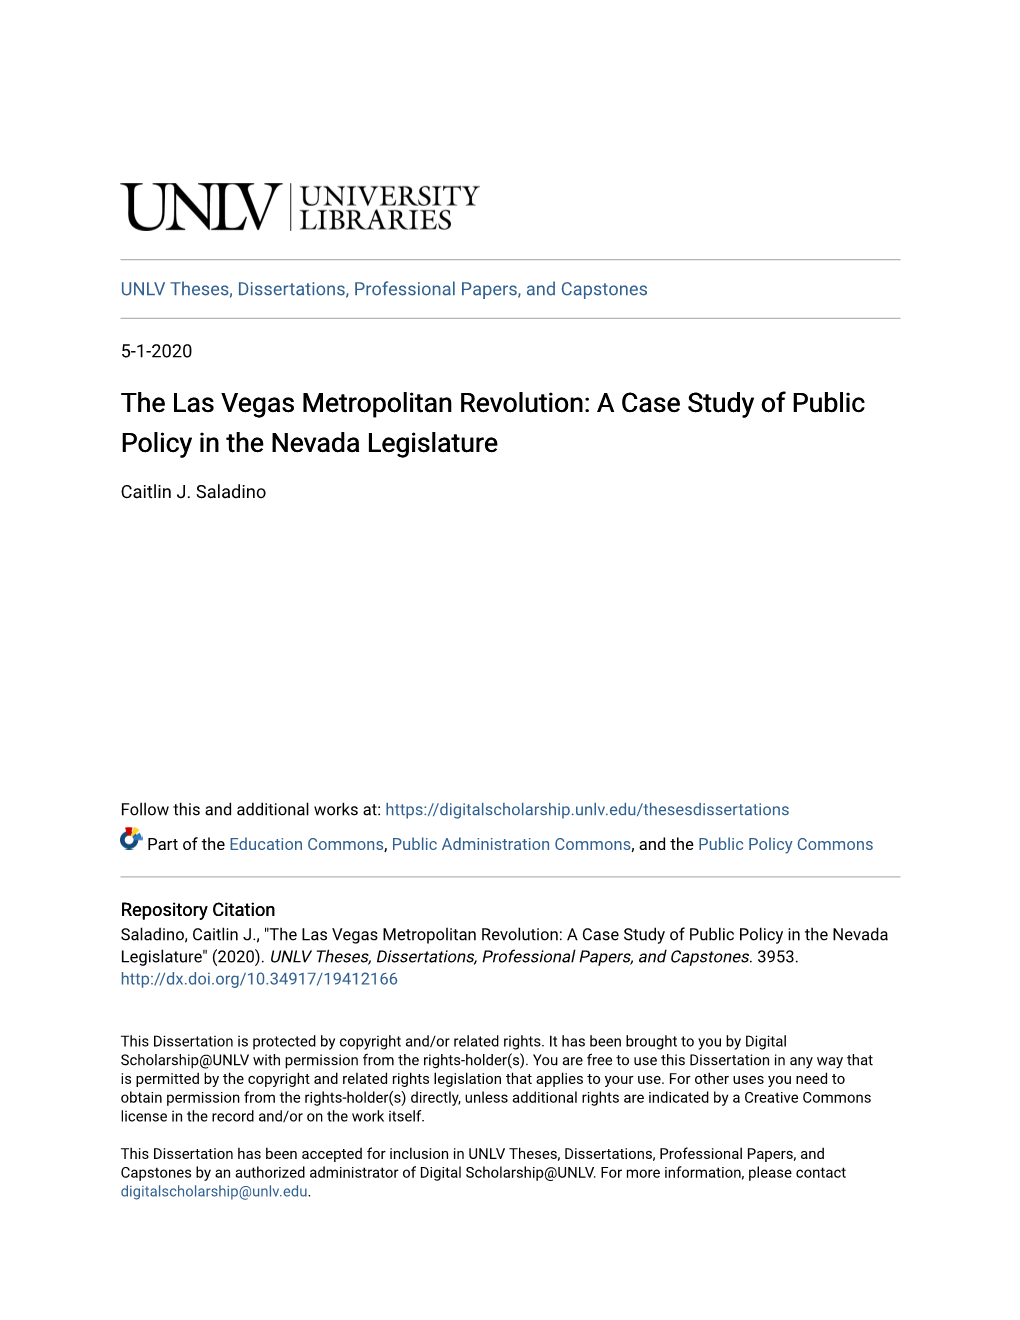 The Las Vegas Metropolitan Revolution: a Case Study of Public Policy in the Nevada Legislature